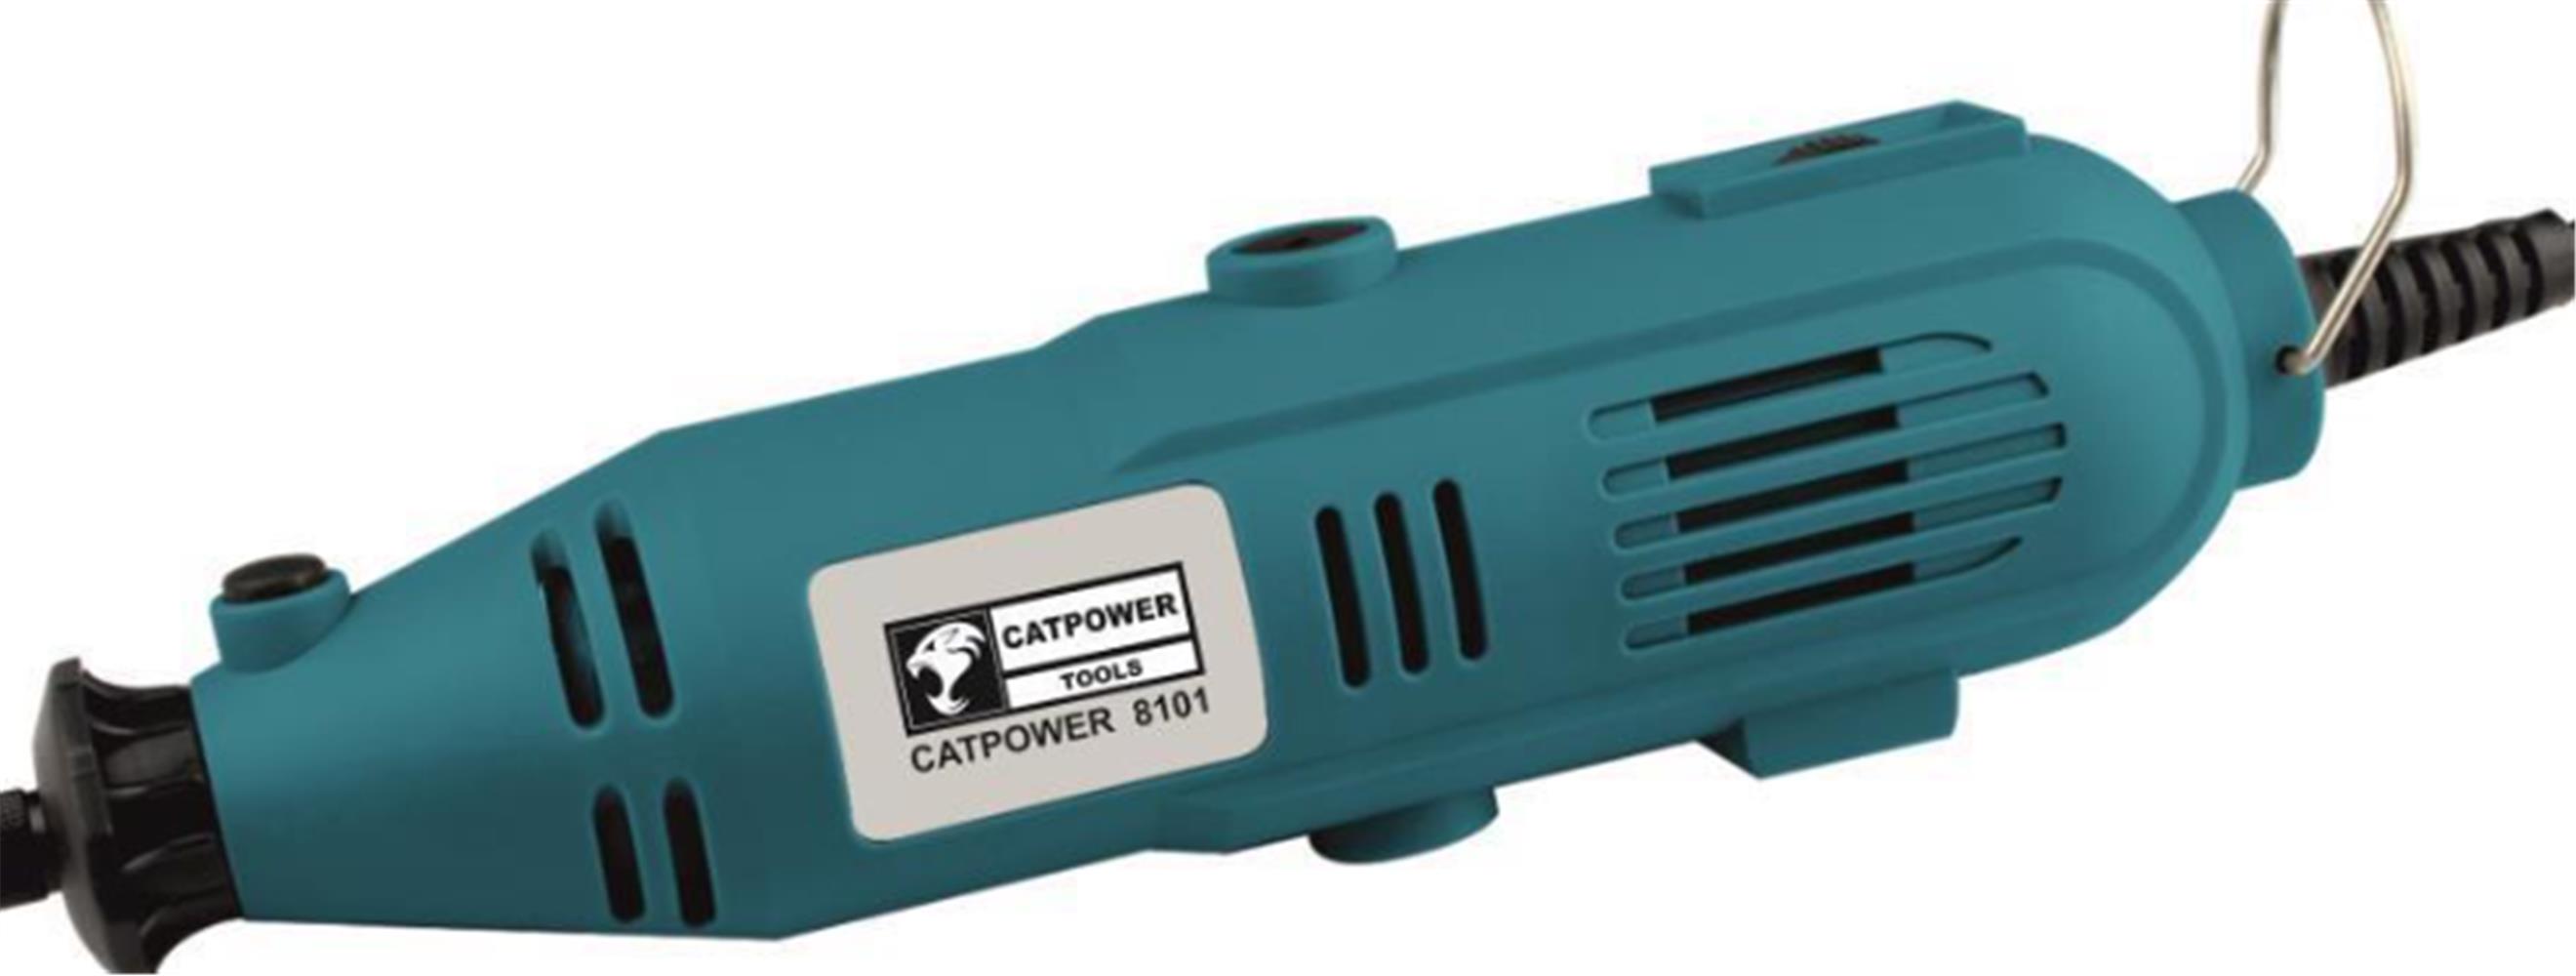 CatPower%20Cat-8101%20Gravür%20Taşlama%20Makinası